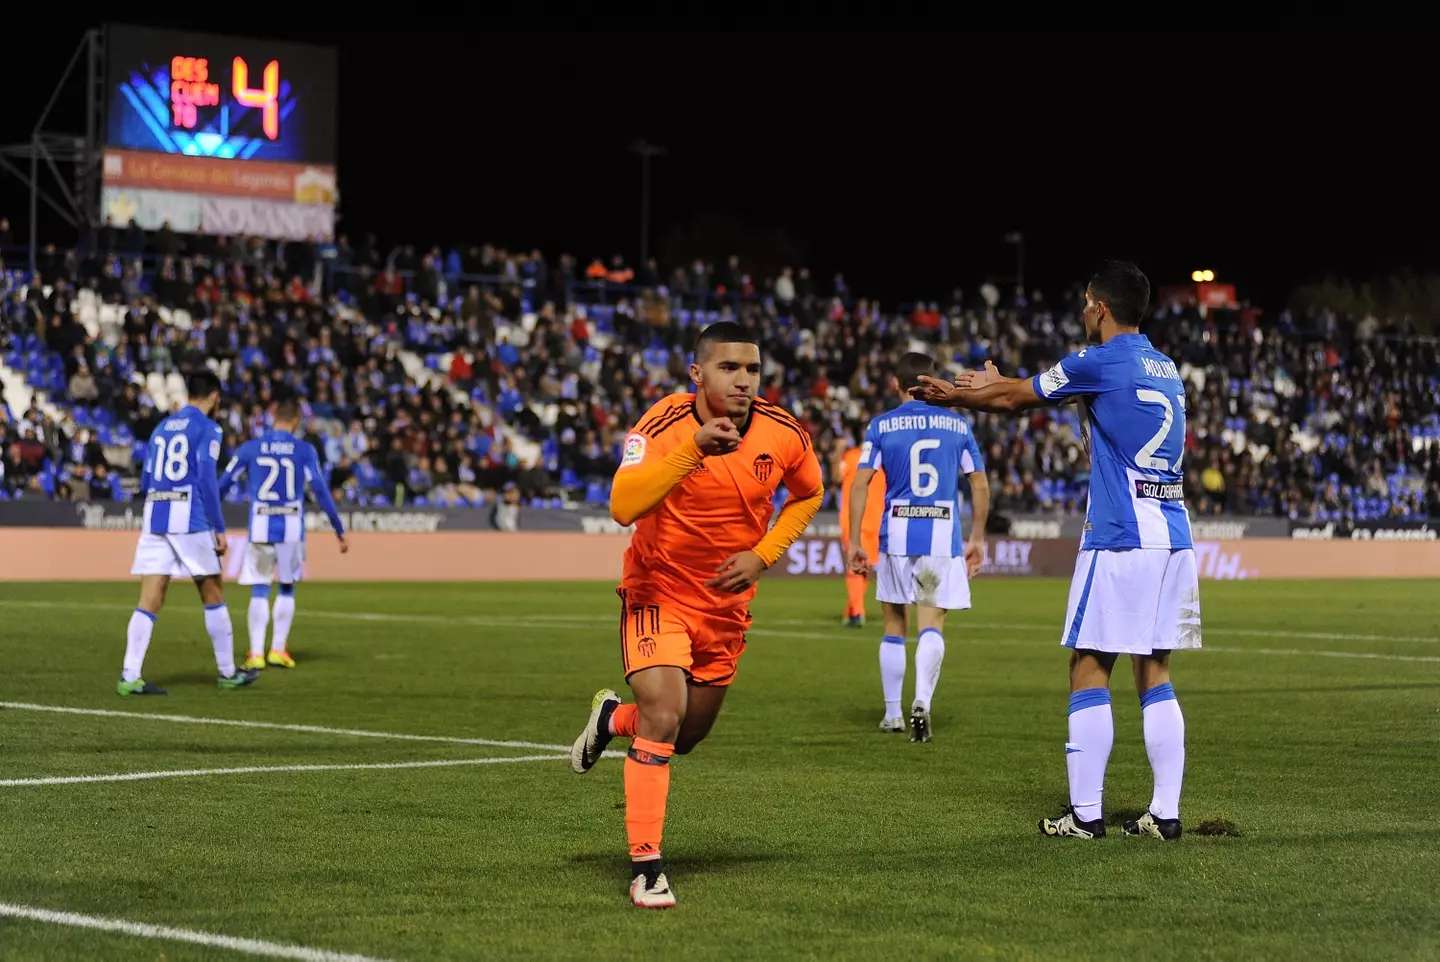 Bakkali celebrates after scoring against CD Leganes in the Copa Del Rey. Image credit: Getty 